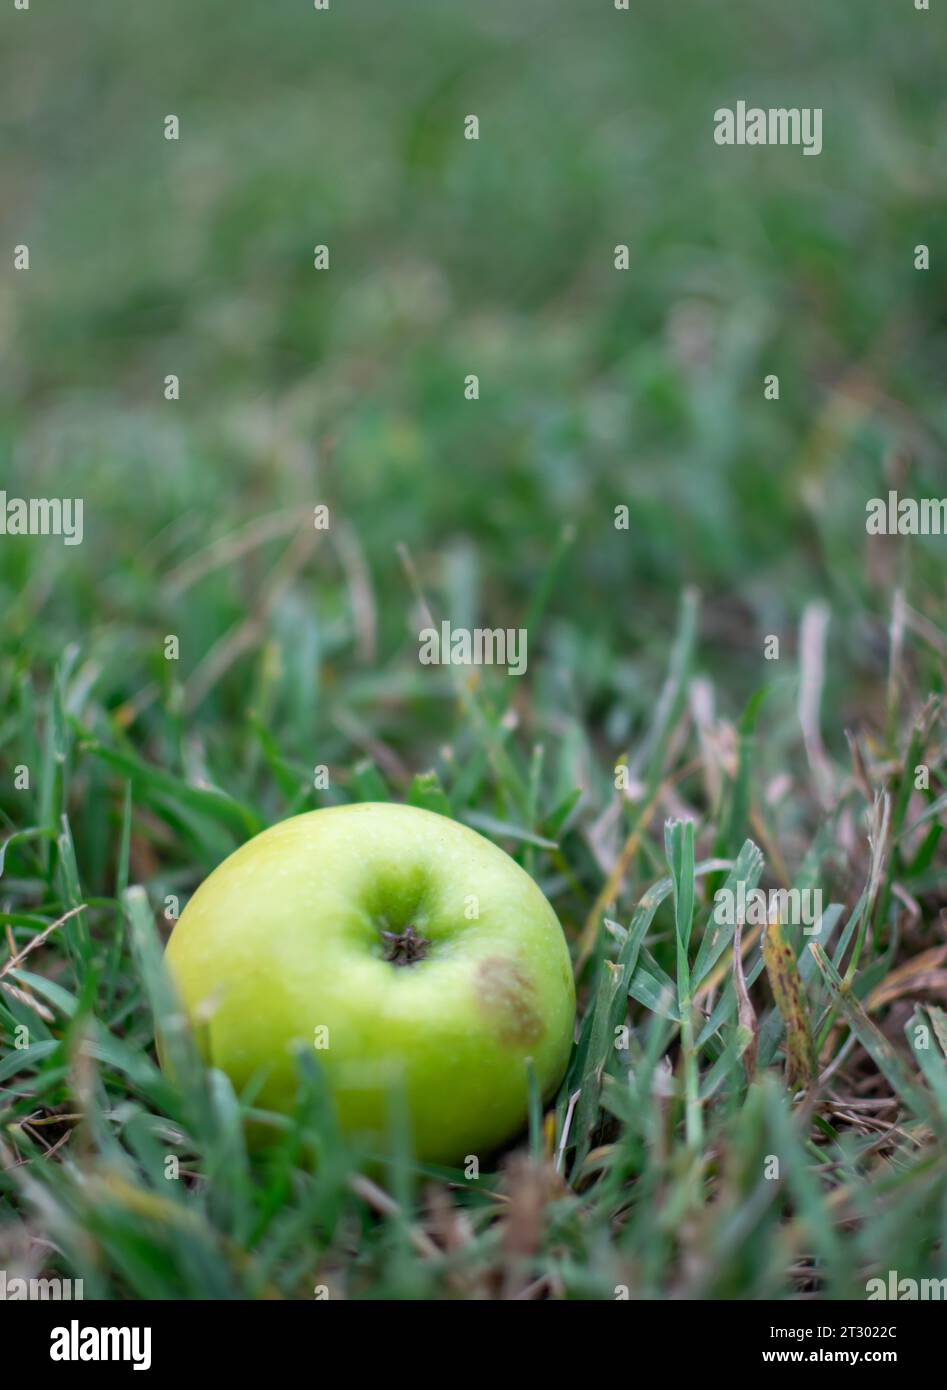 Close-up image of wild apple fallen in rustic field in seasonal changes Stock Photo